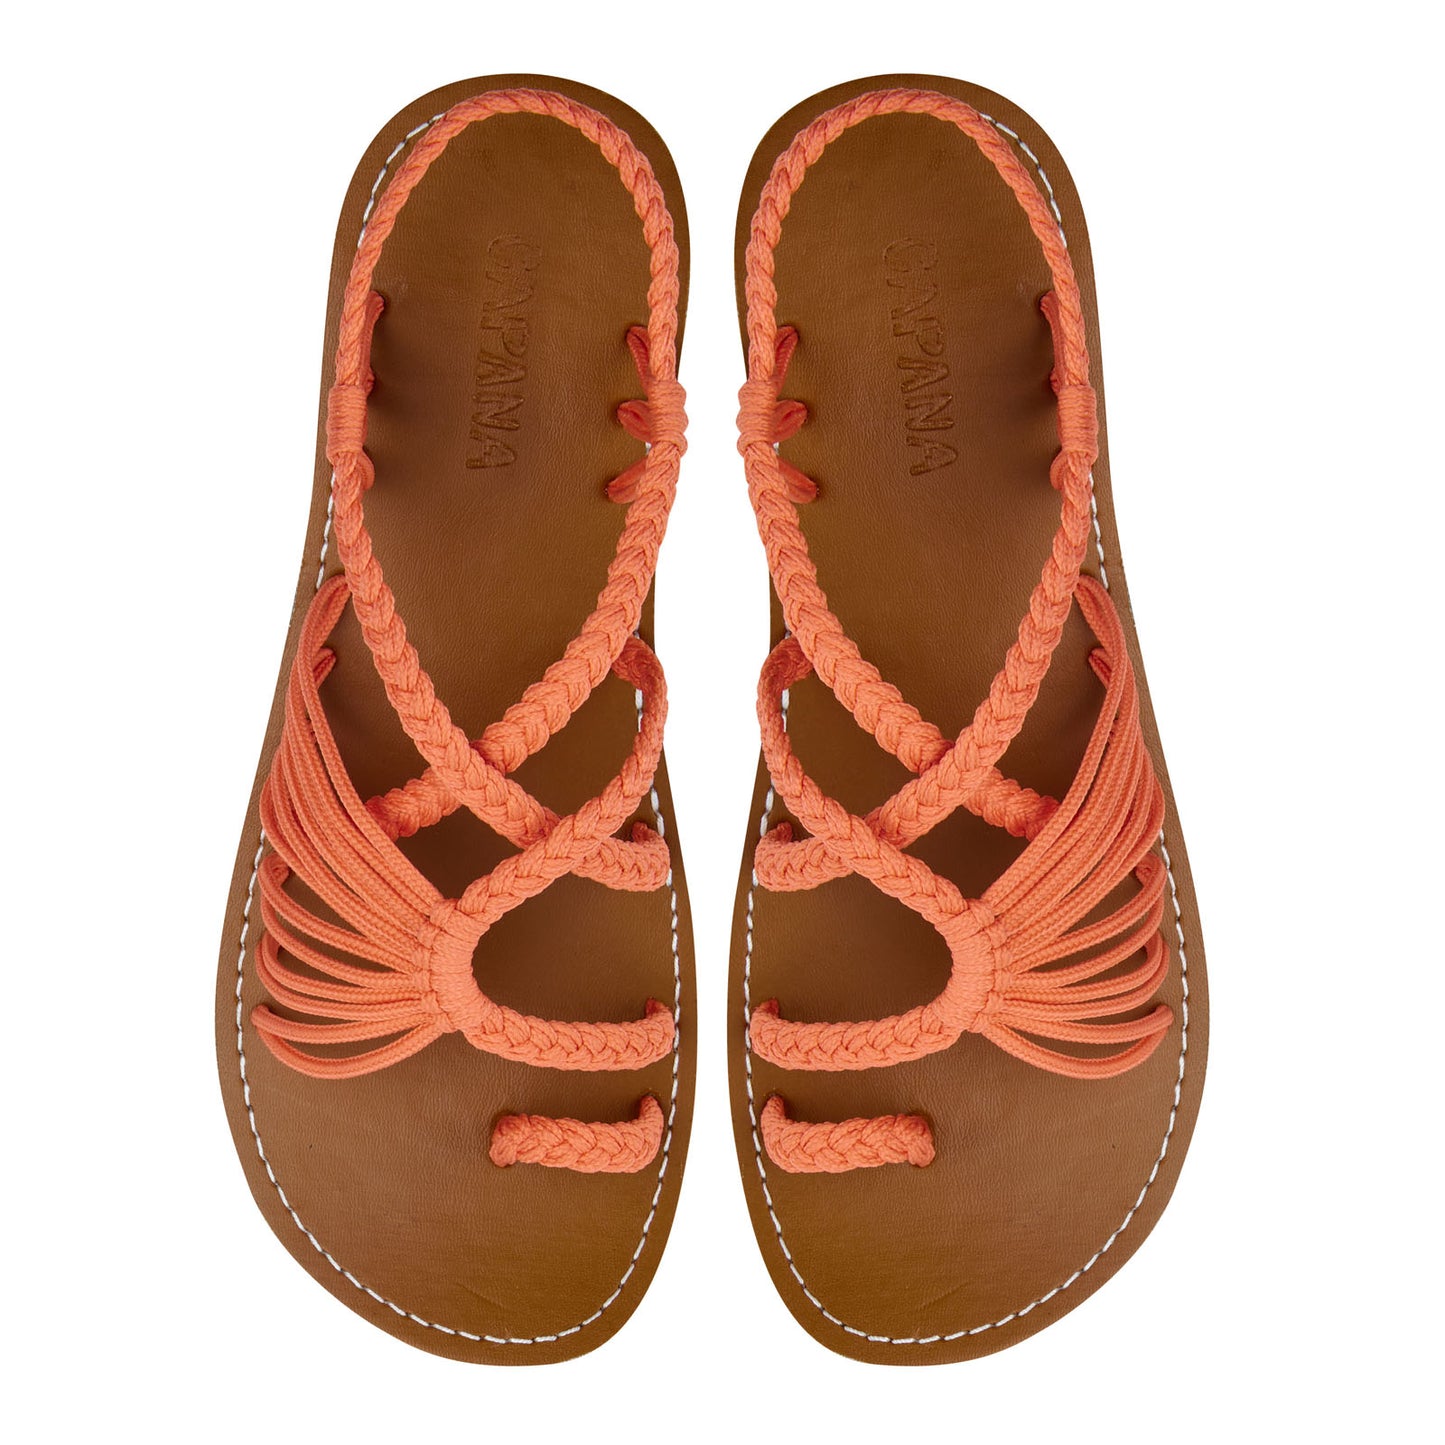 Commune Salmon Rope Sandals Coral loop design Flat sandals for women